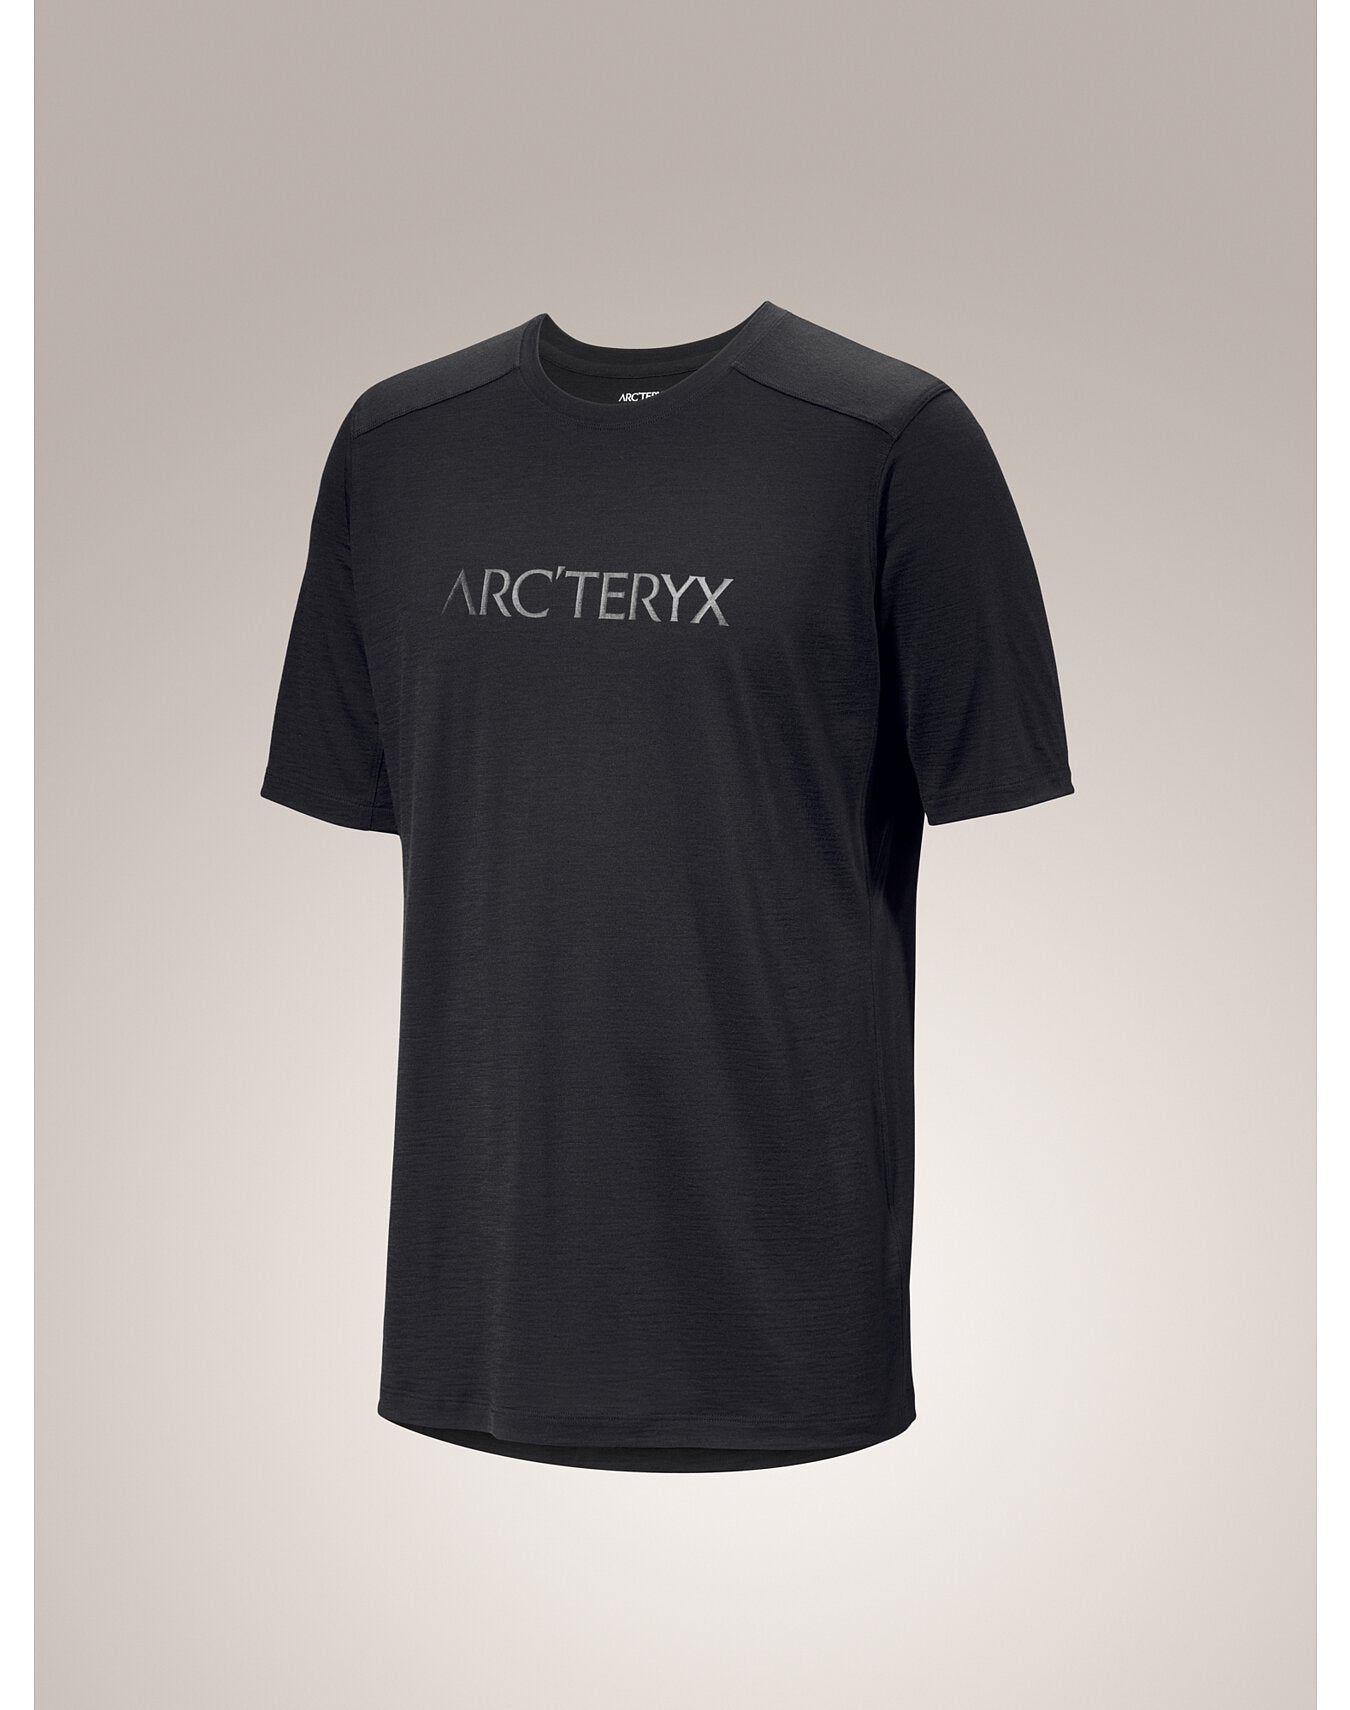 Arc'teryx Men's Ionia Merino Wool Arc'World Logo SS Shirt in Black